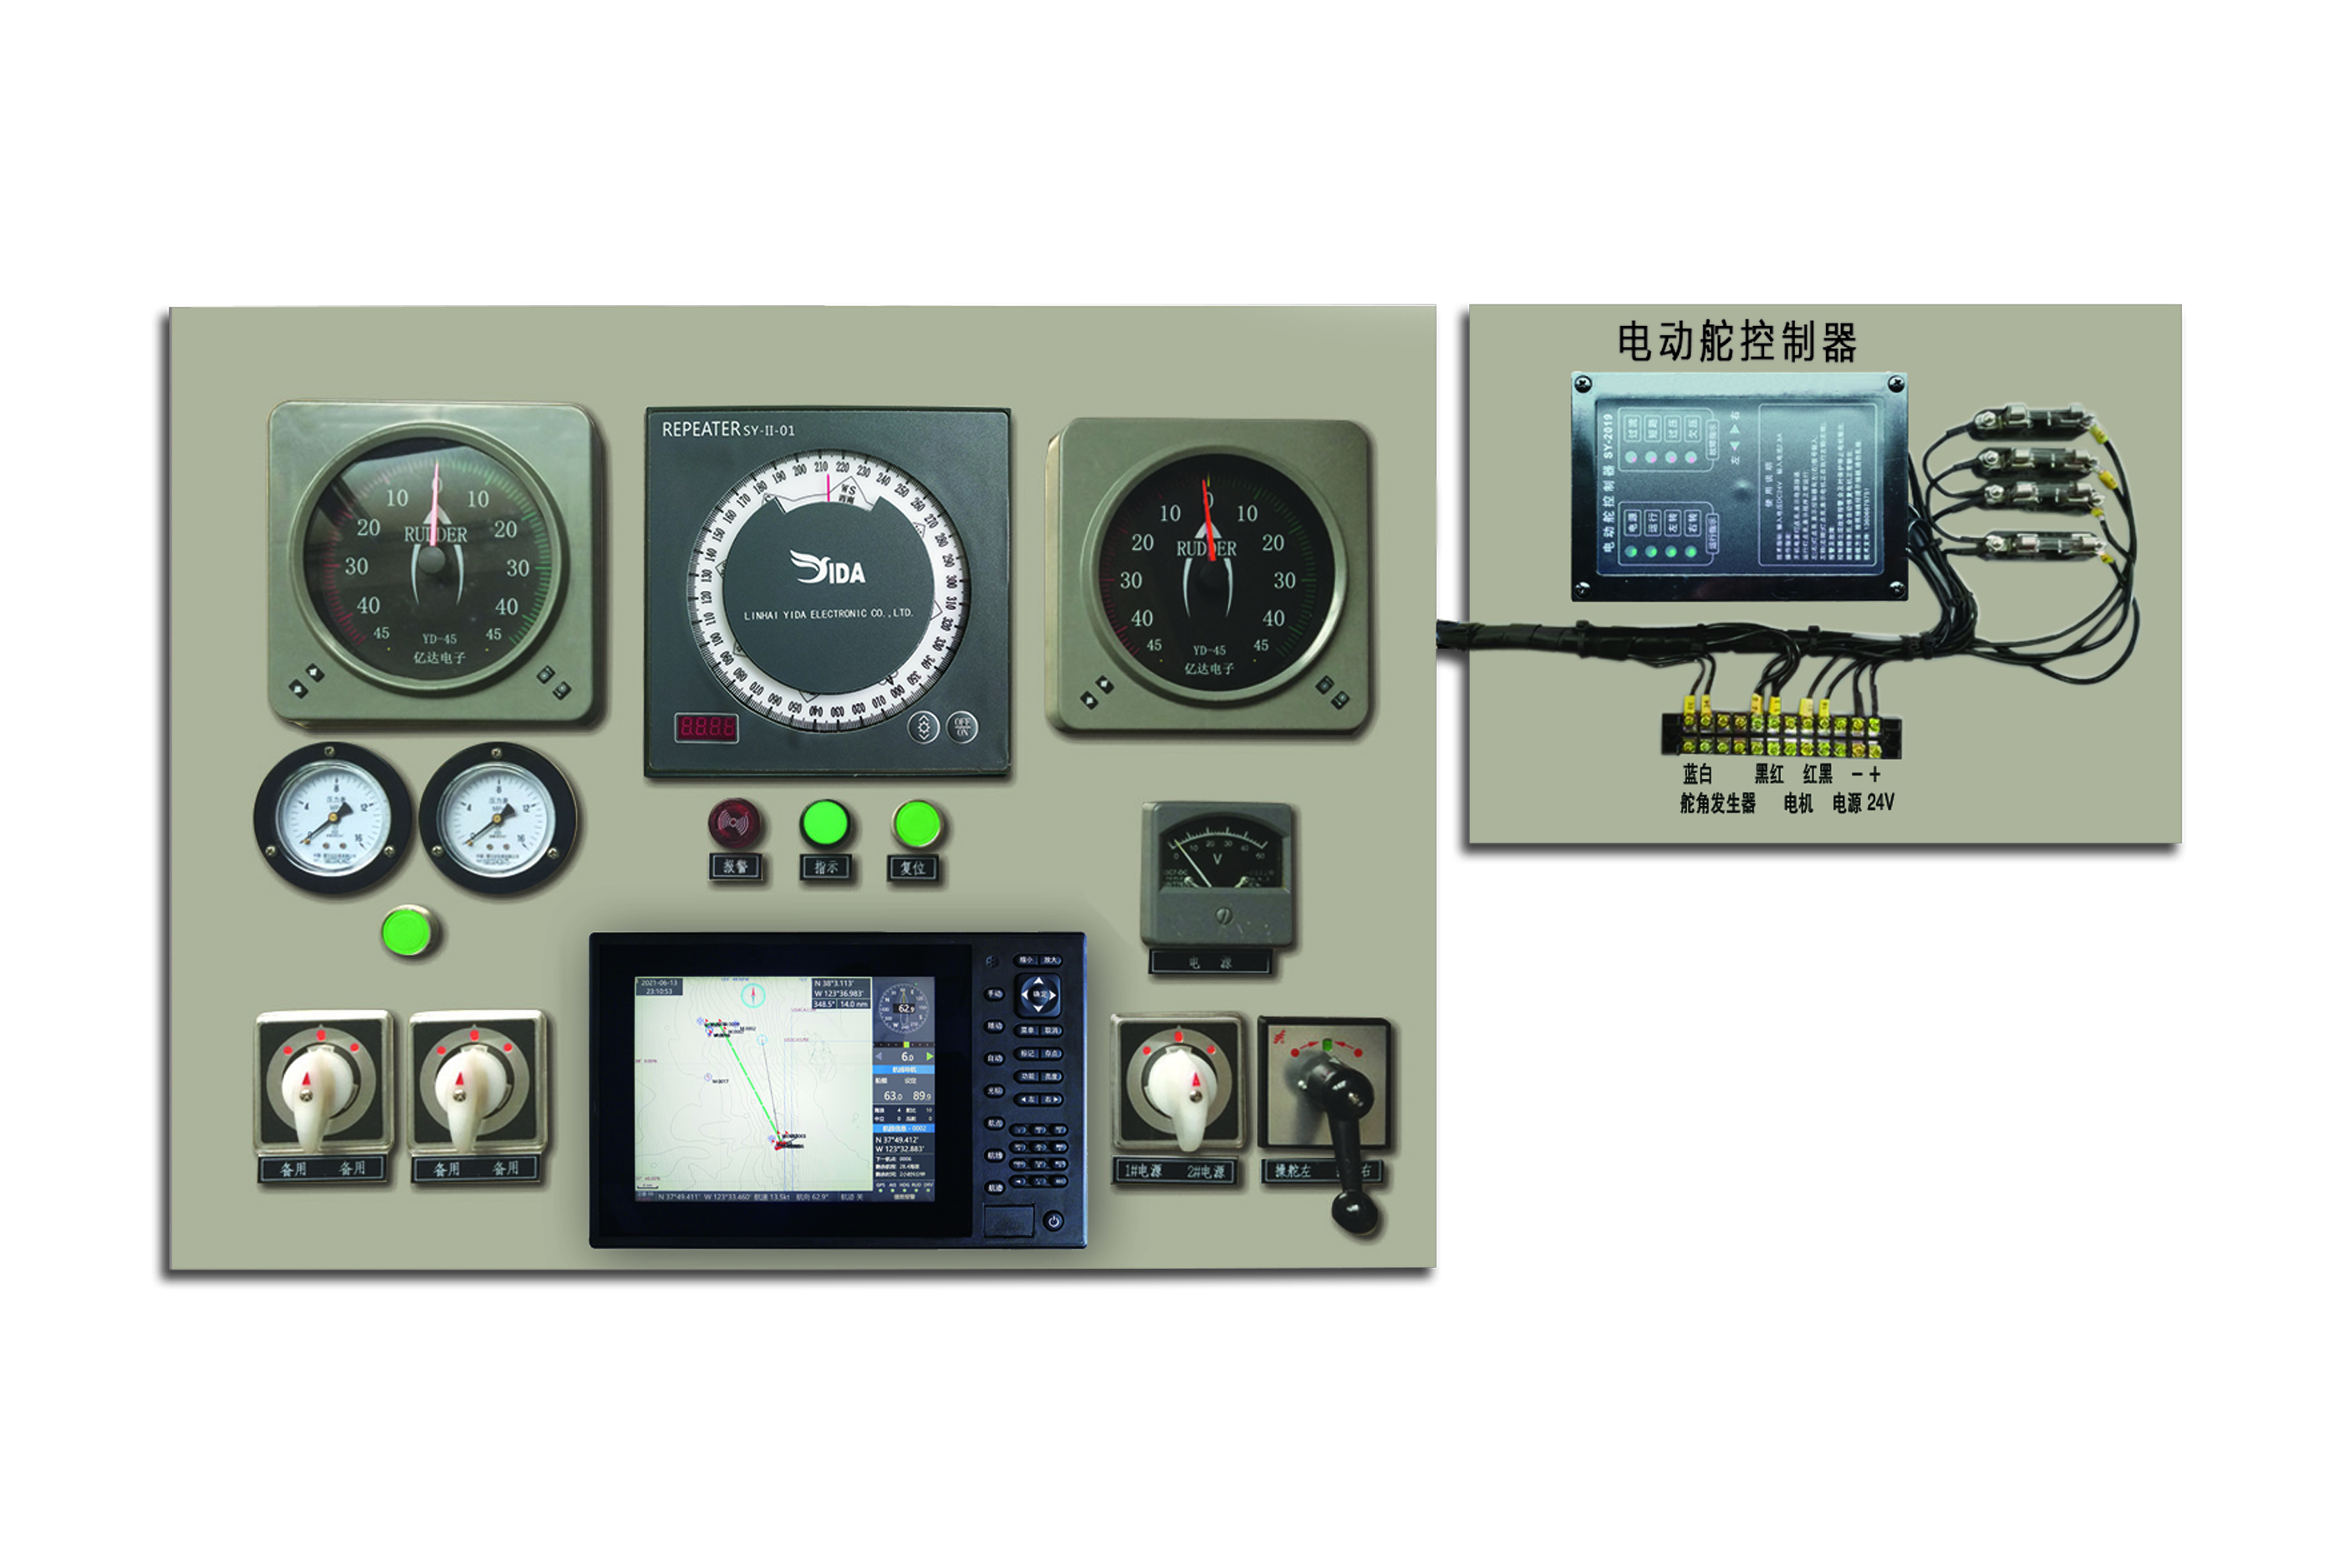 2168 Auto Rudder Pilot Control Board (optional production)